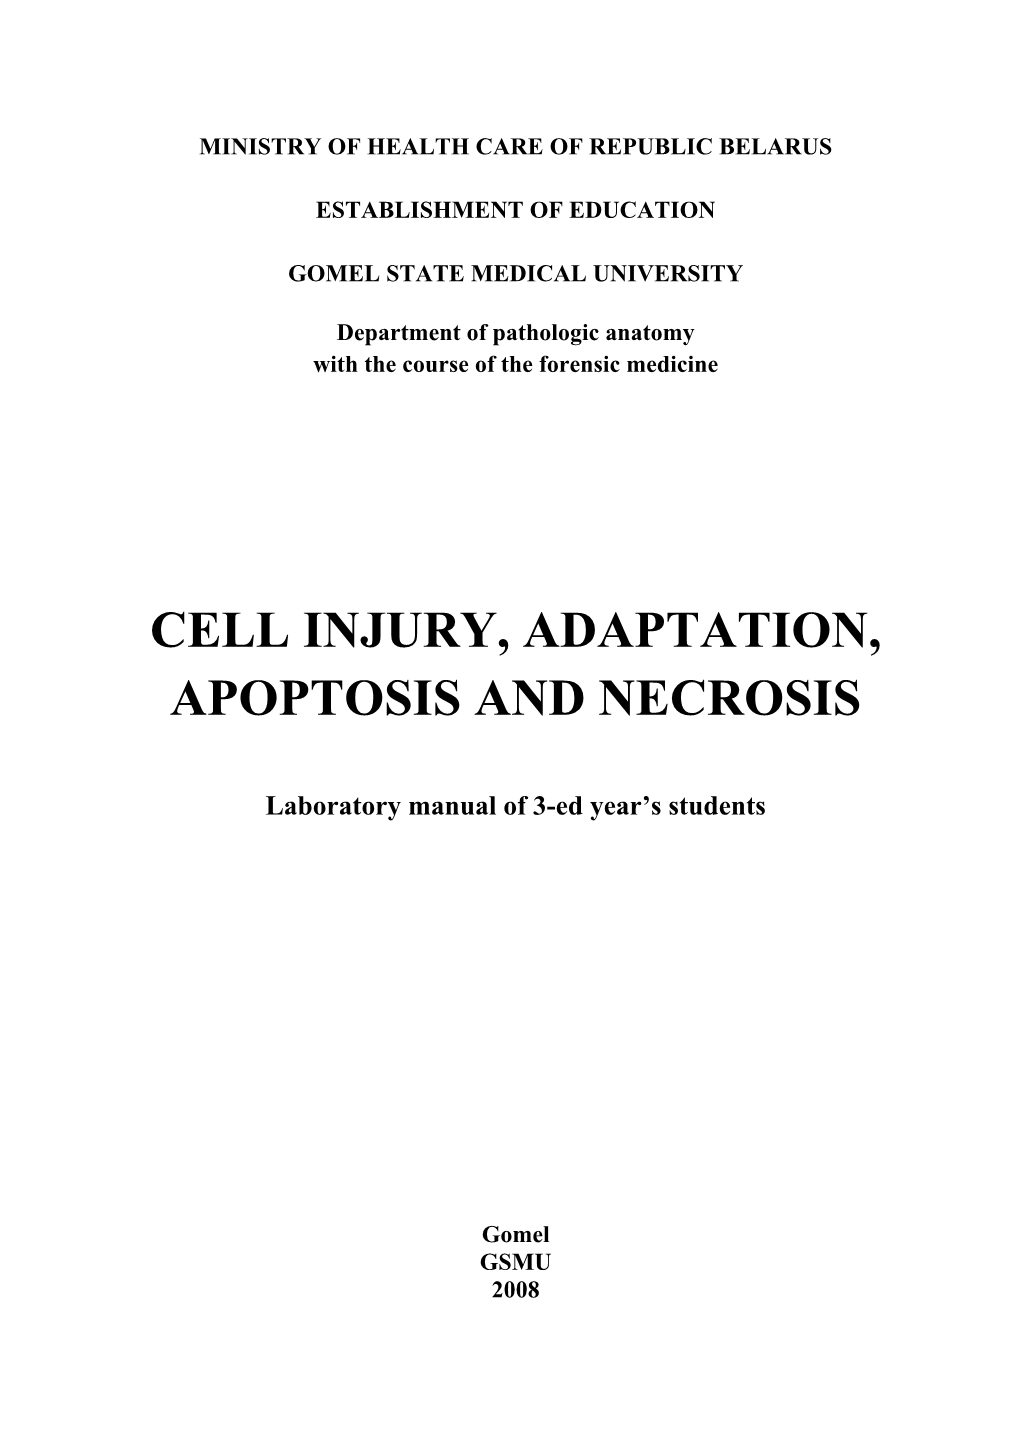 Cell Injury, Adaptation, Apoptosis and Necrosis